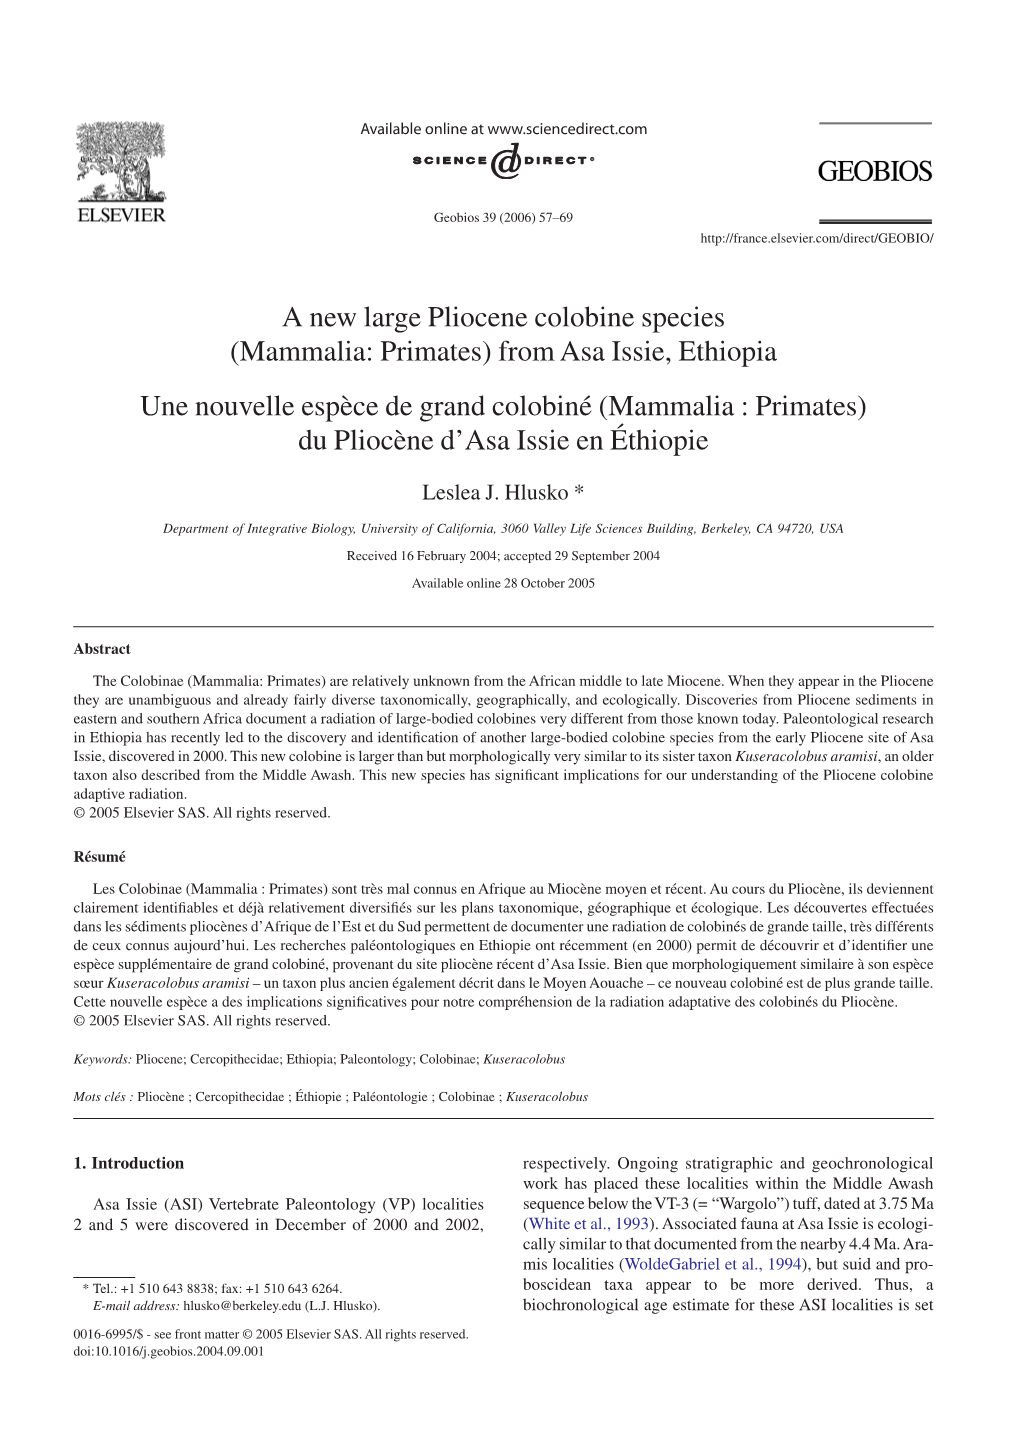 A New Large Pliocene Colobine Species (Mammalia: Primates)